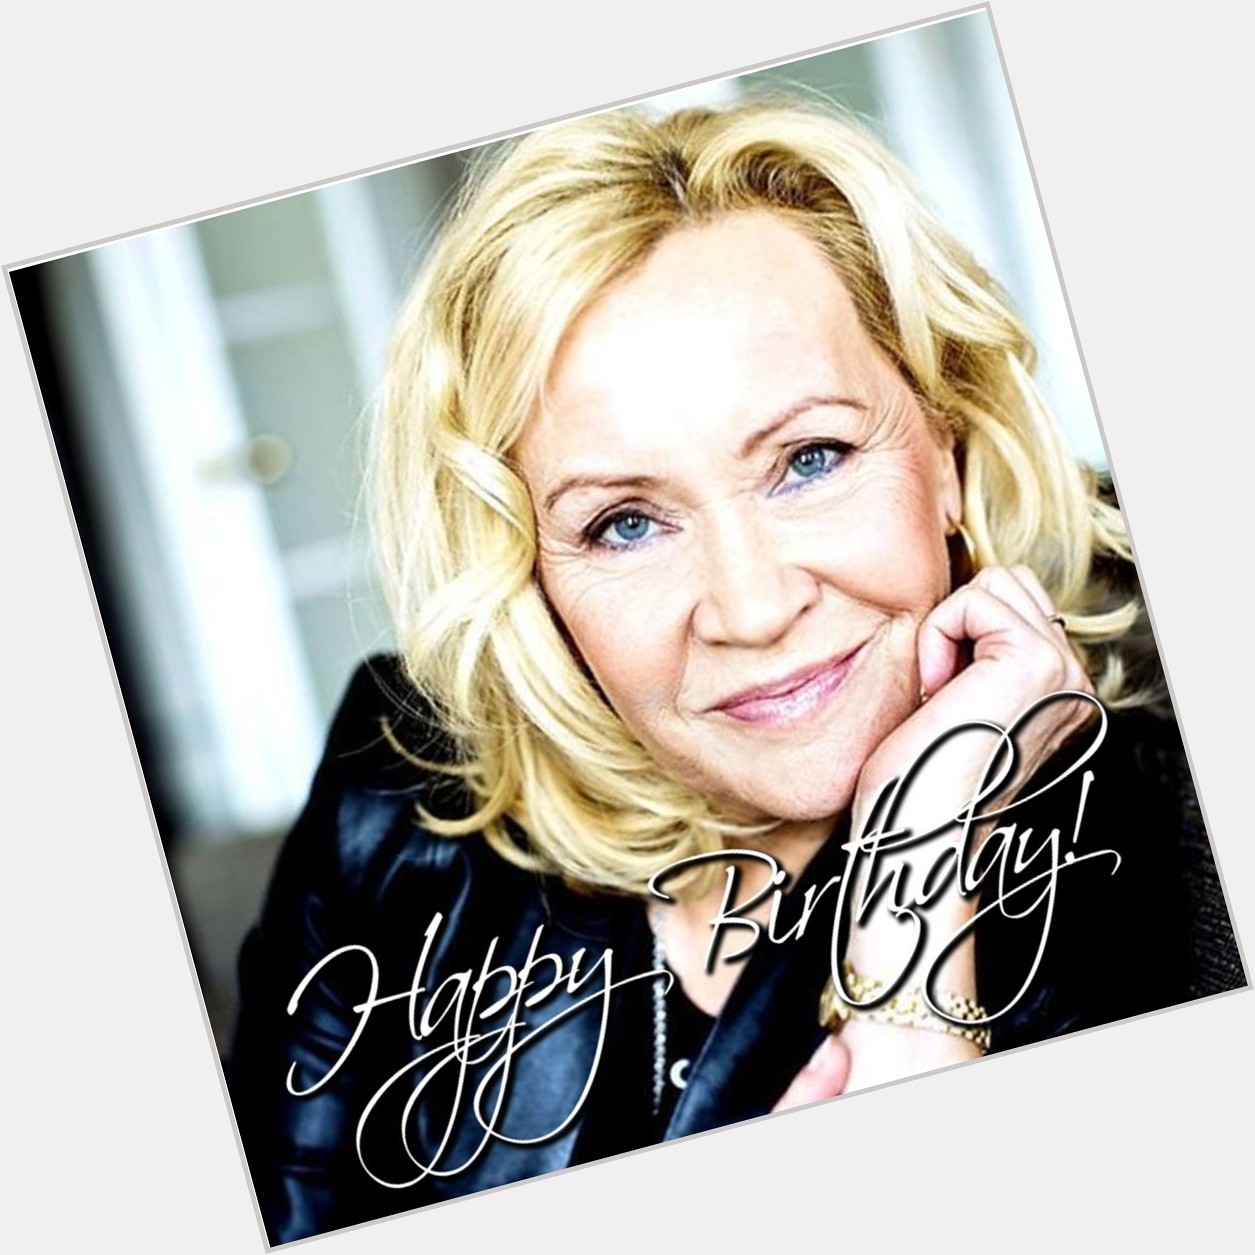 Happy best birthday wishes to ABBA\s very own Agnetha Faltskog  